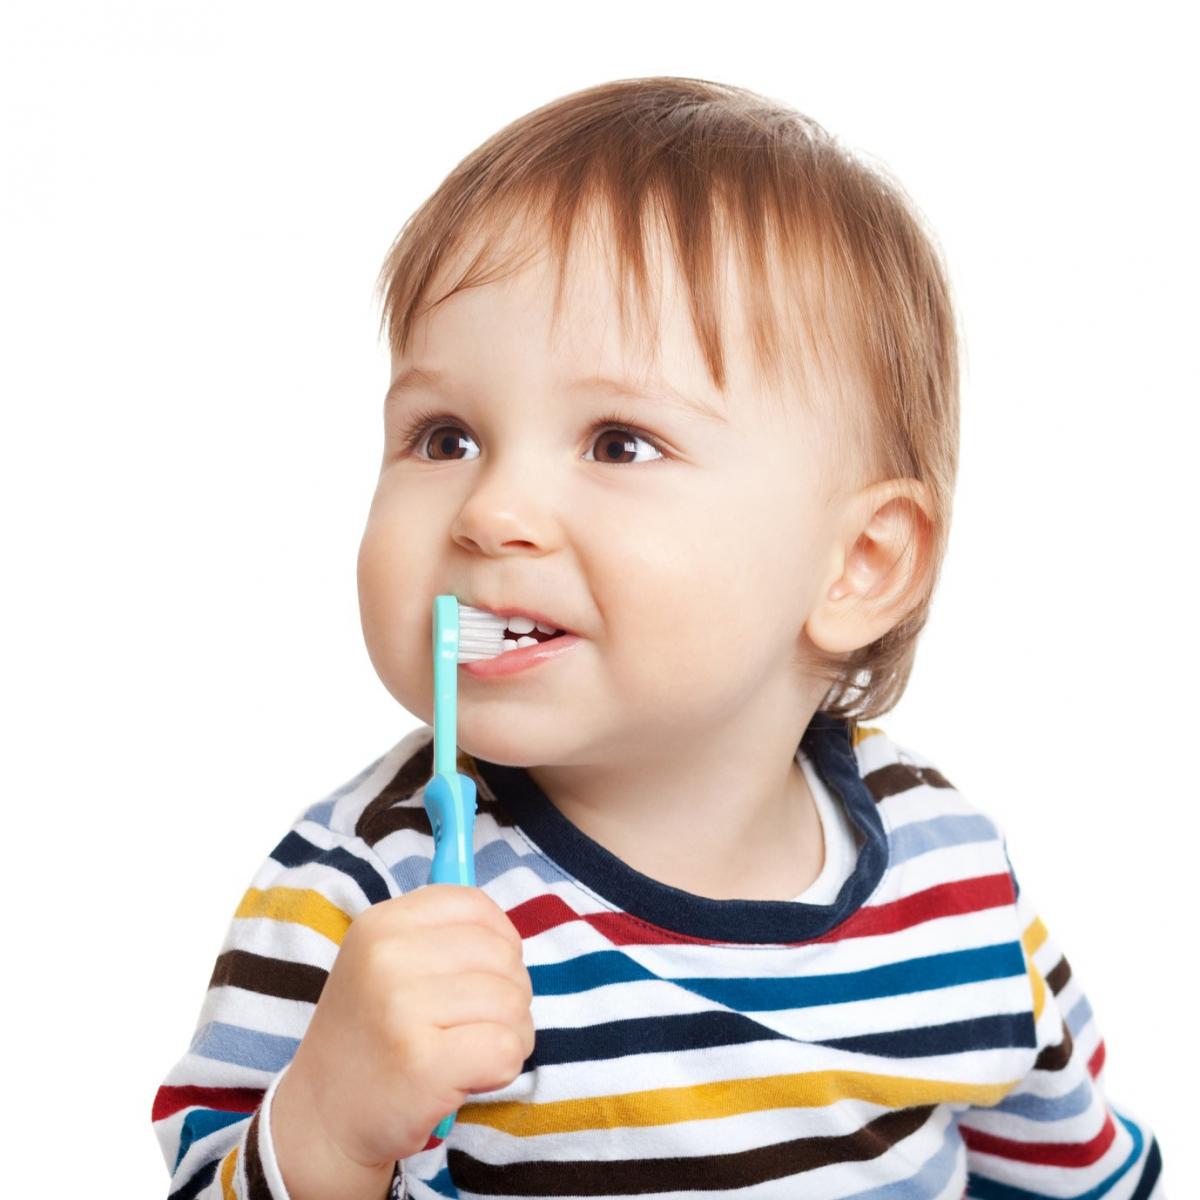 Newborn Brushing His Teeth